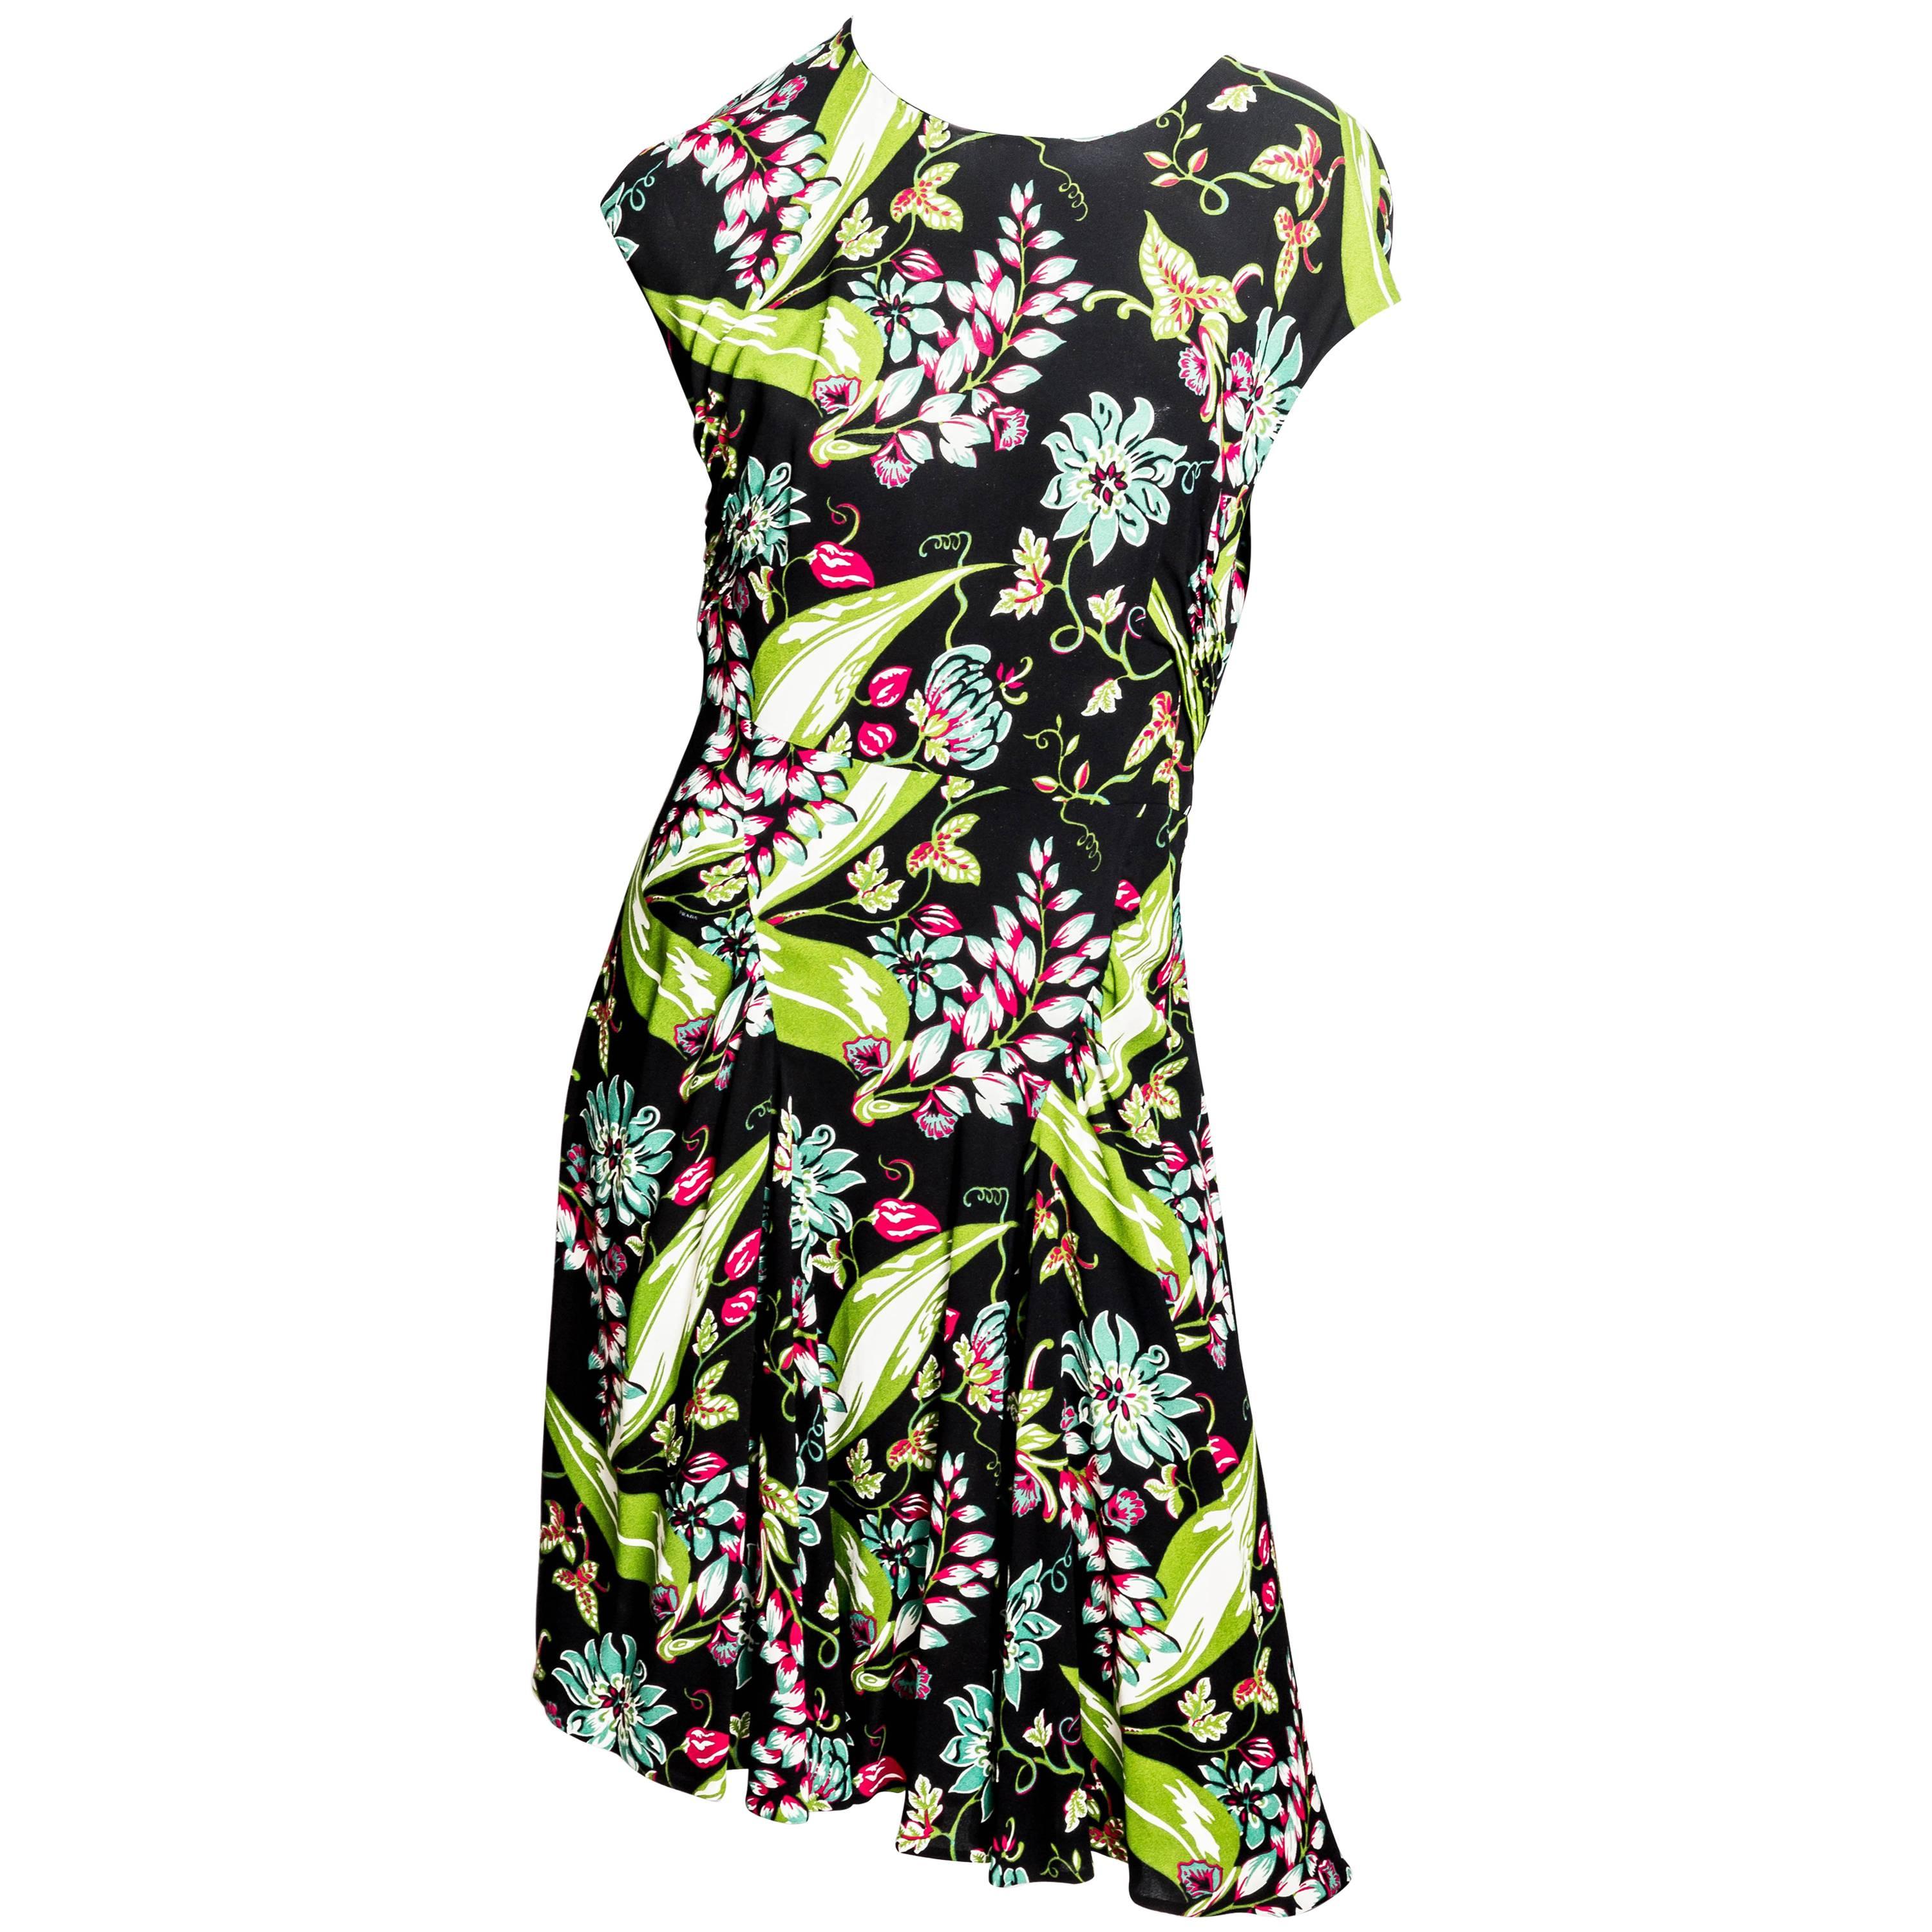 Prada Green and Black Floral Print Dress - Size 44